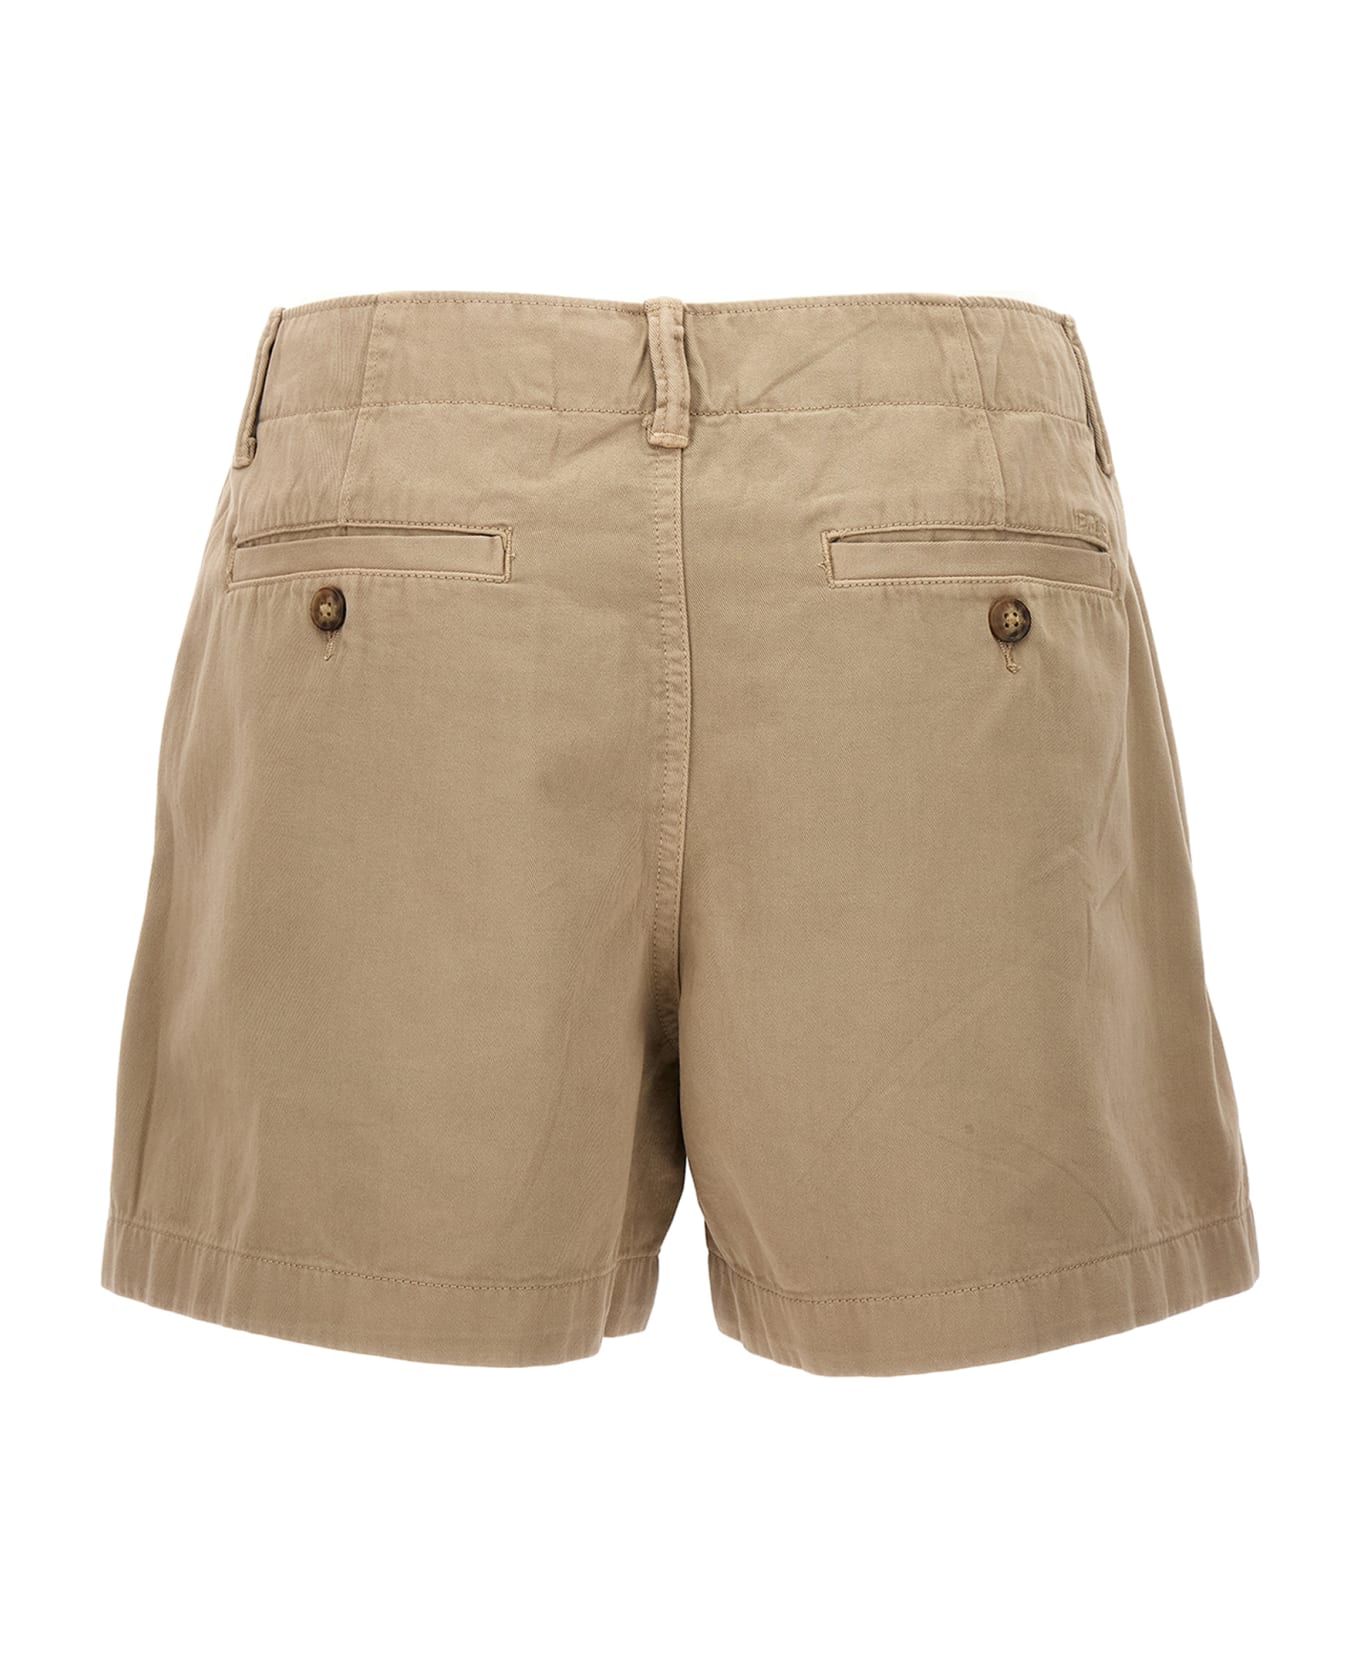 Polo Ralph Lauren Chino Shorts - Beige